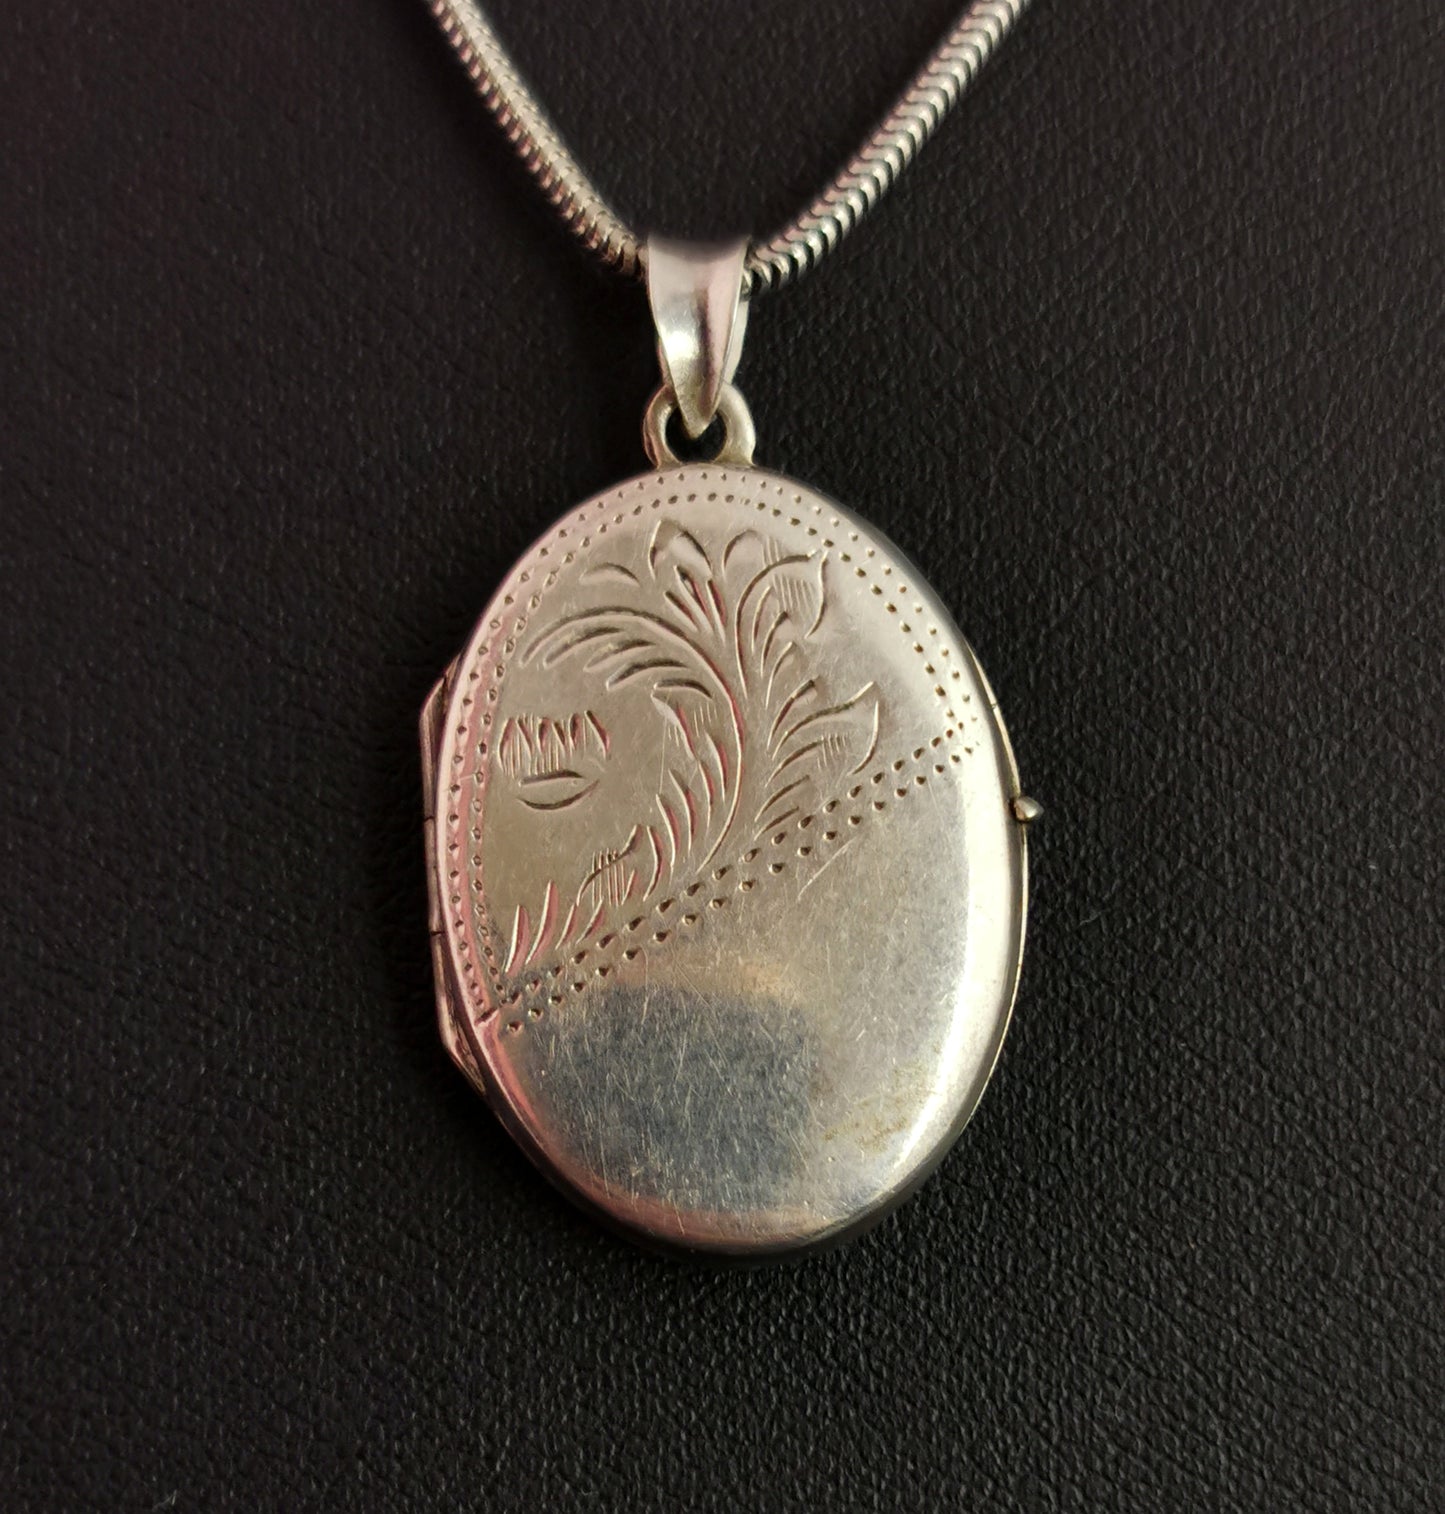 Vintage sterling silver locket, snake chain necklace